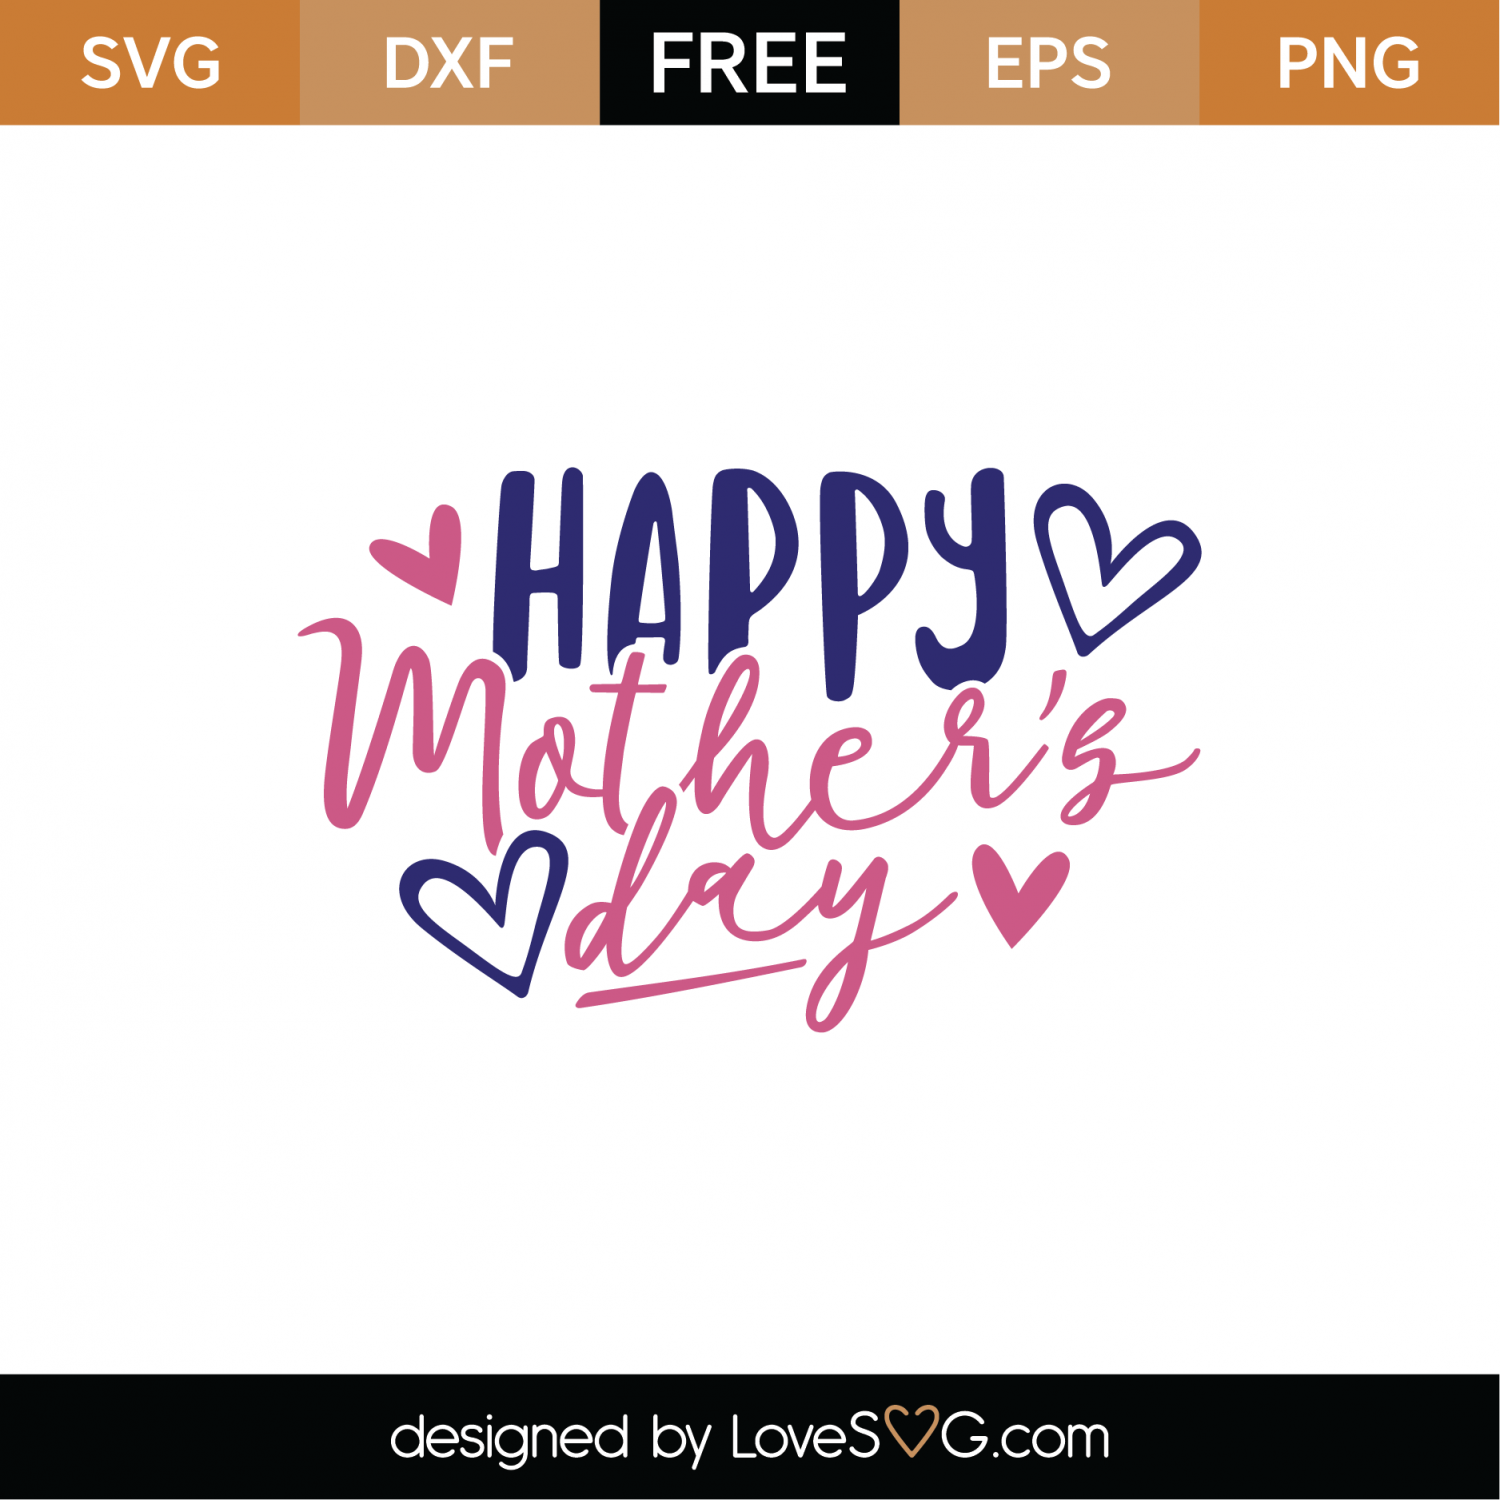 Free Happy Mother's Day SVG Cut File | Lovesvg.com